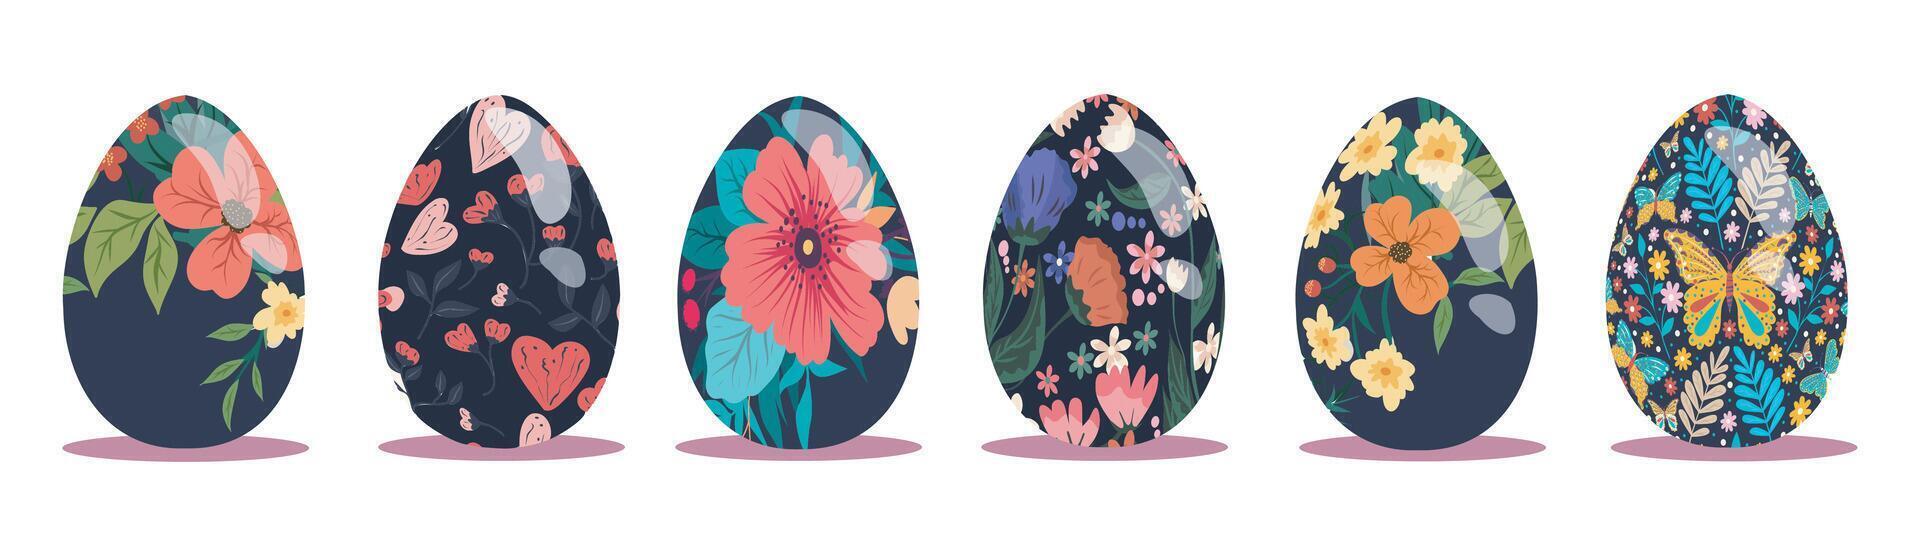 Vector Happy Easter eggs Decorative set of bright Easter eggs Easter eggs with floral ornament pattern